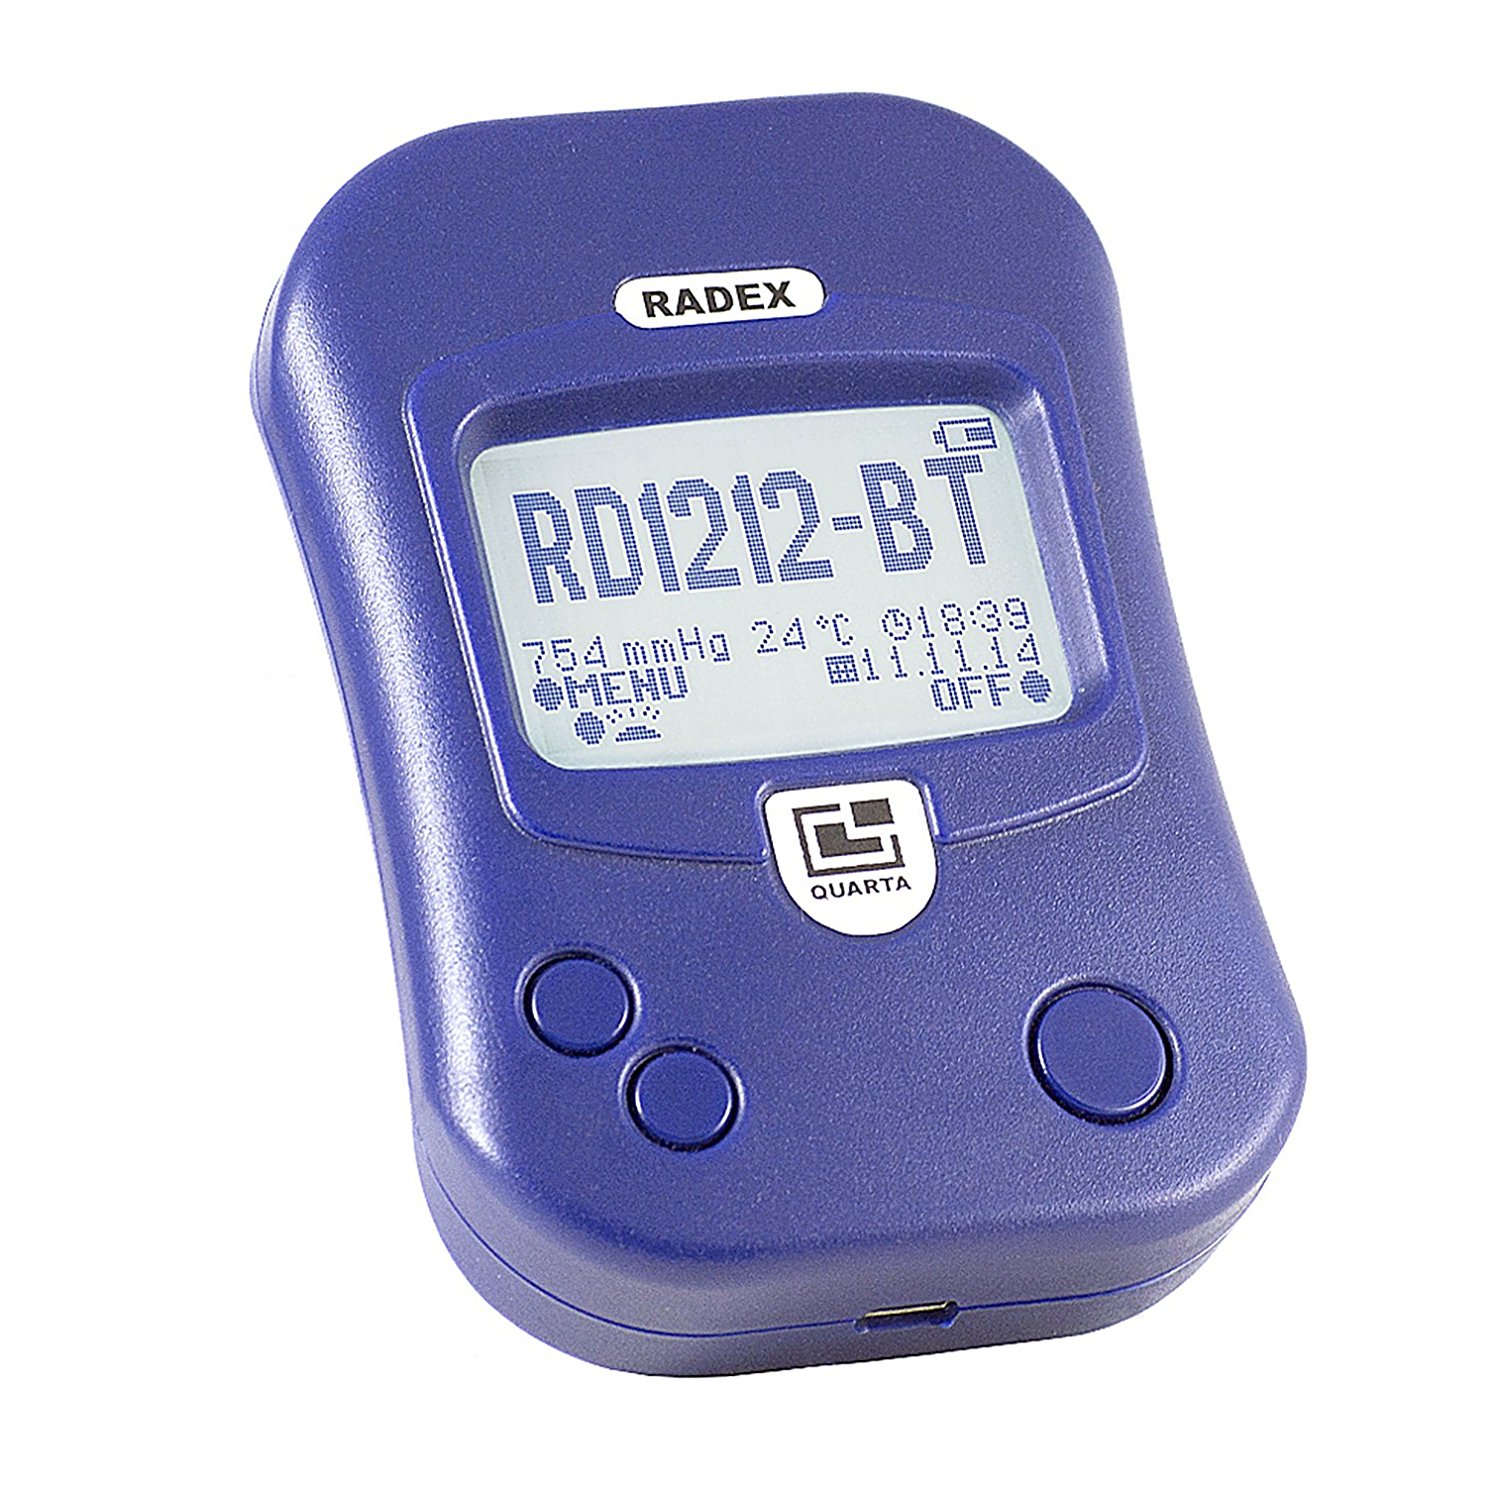 Quarta Radex RD1212-BT geigerzähler